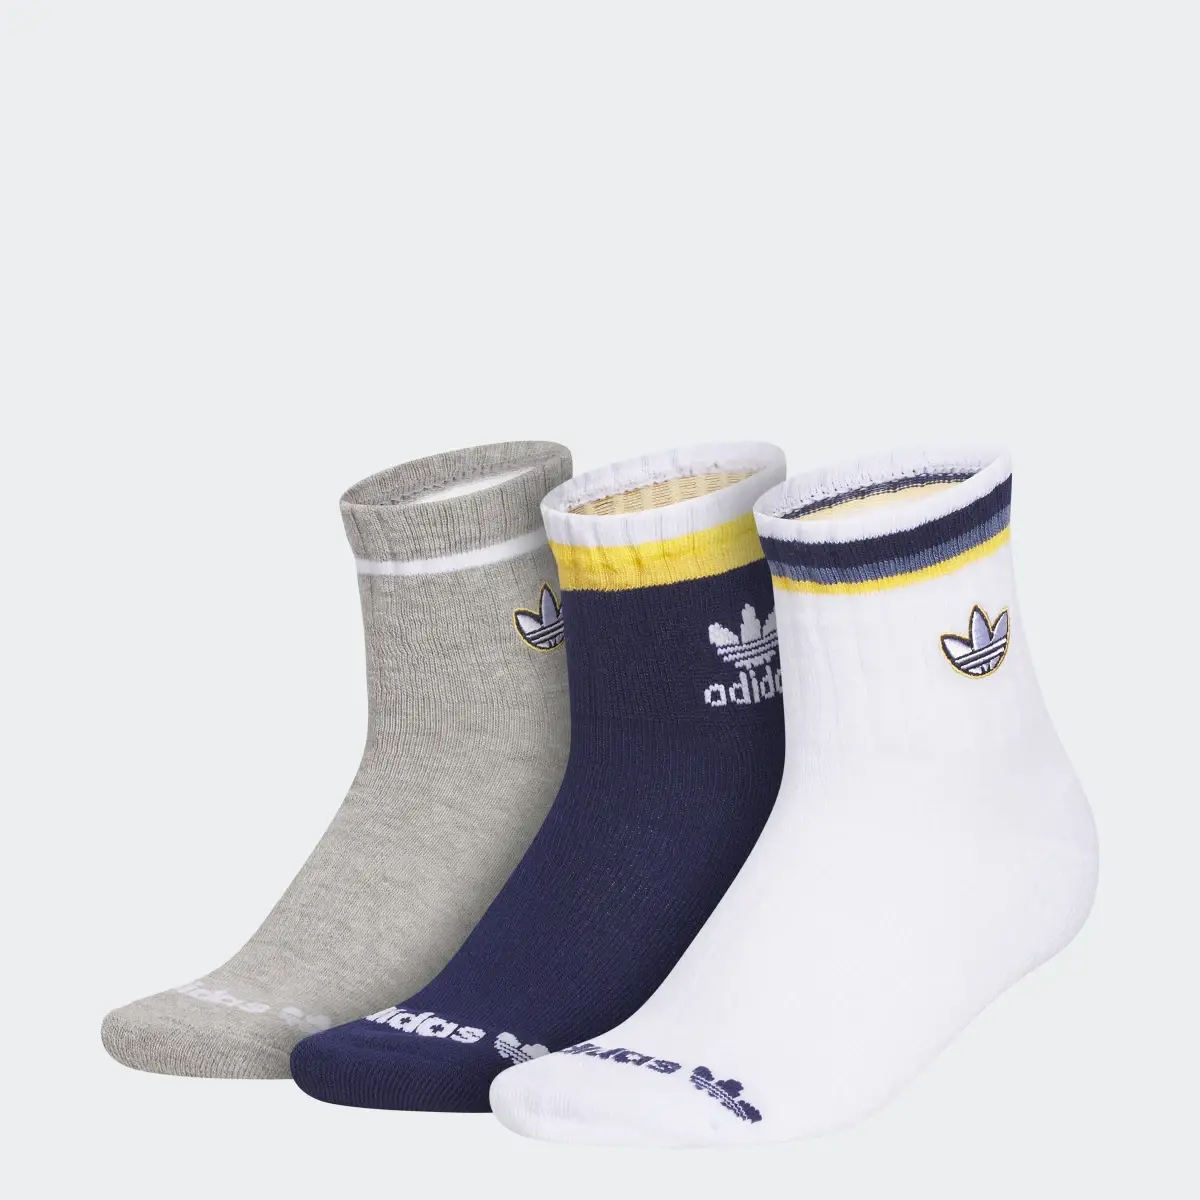 Adidas Ori Aura Socks 3 Pairs. 1